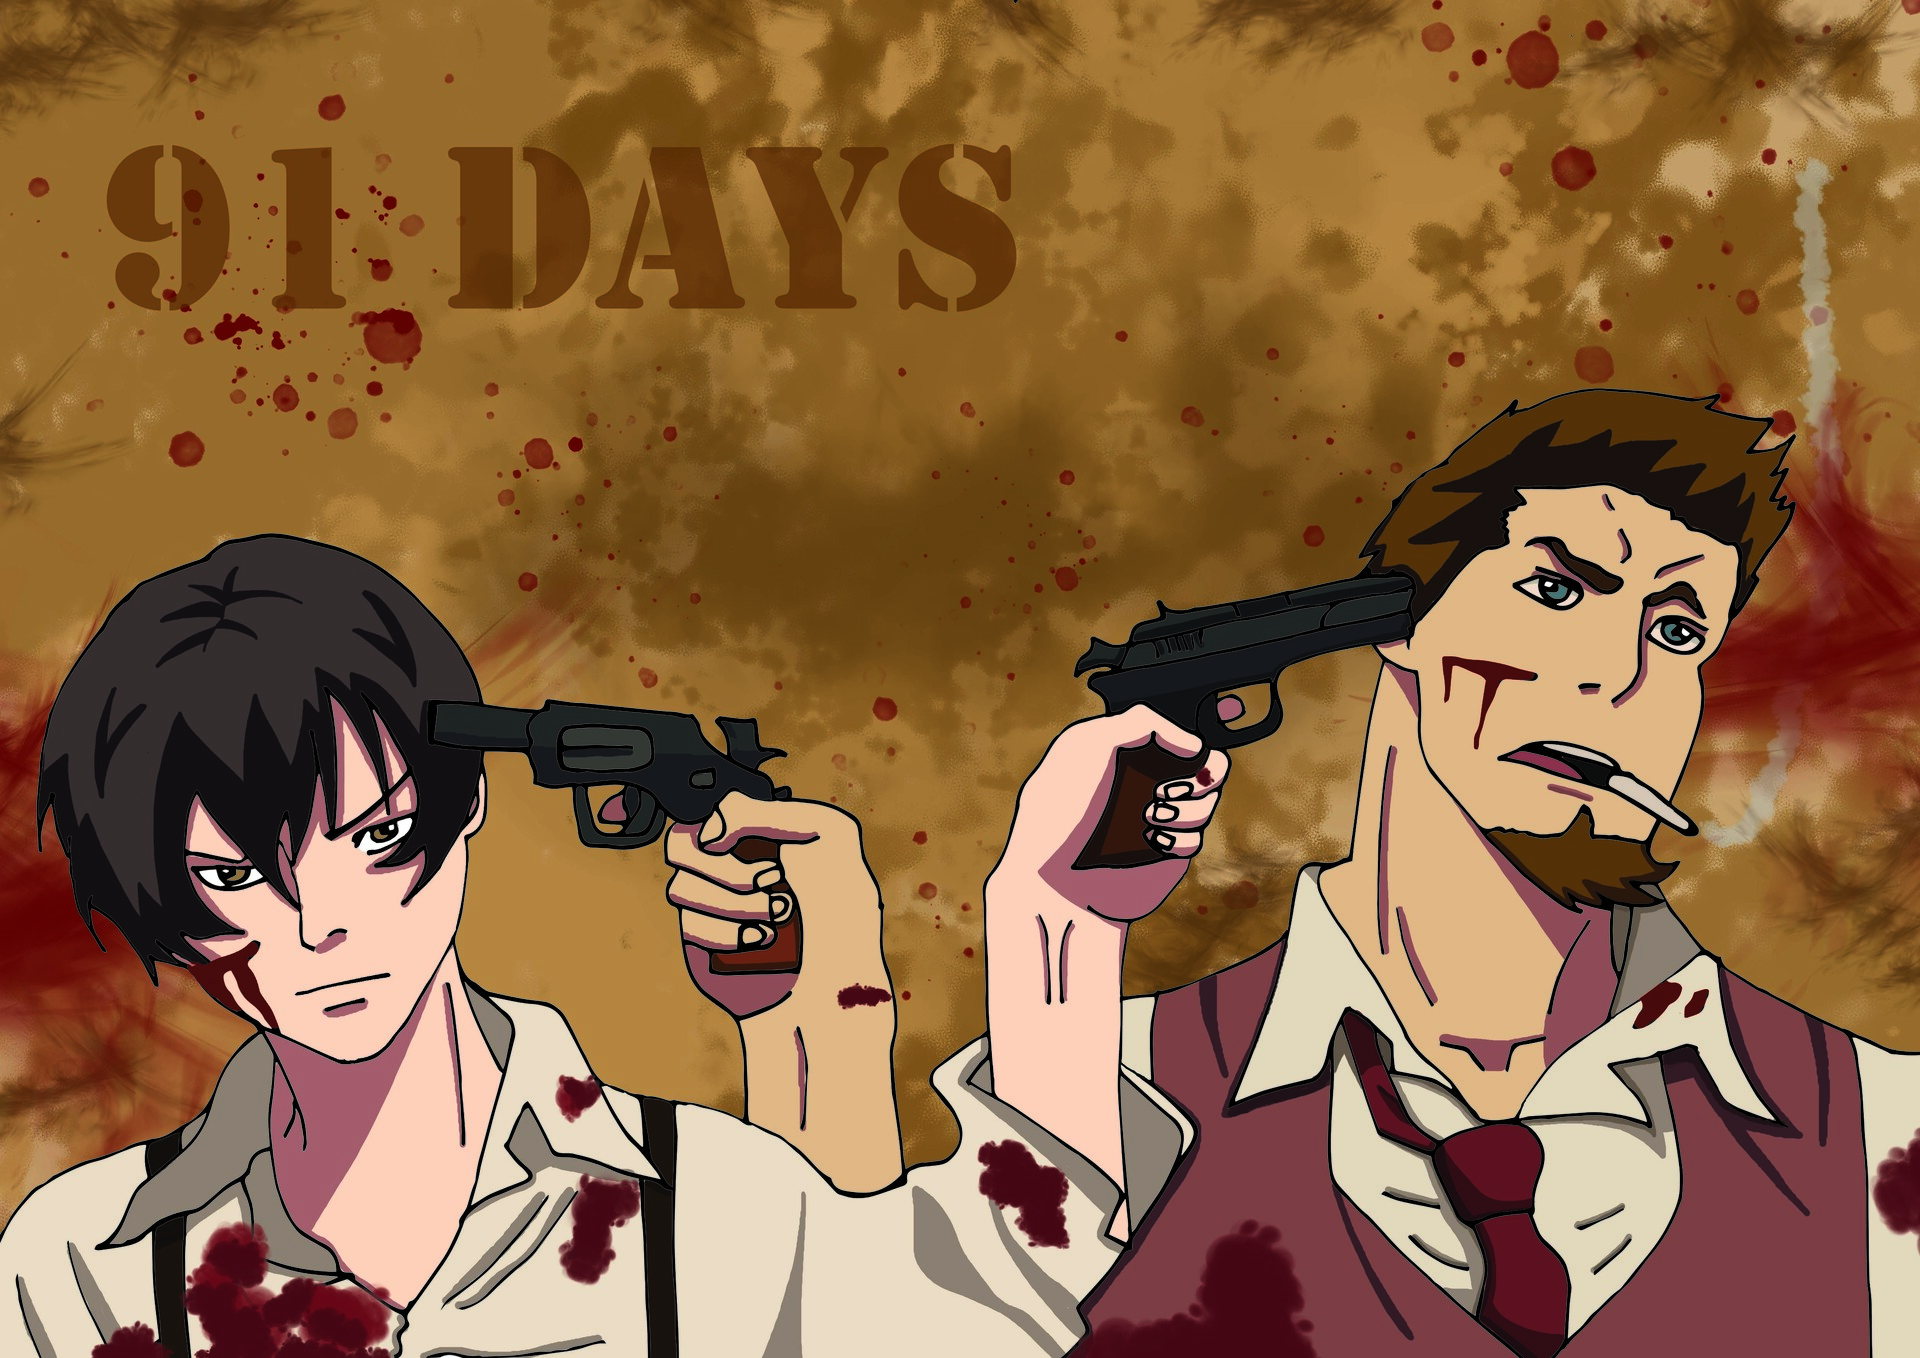 91 DAYS  Anime, Anime screenshots, Anime art